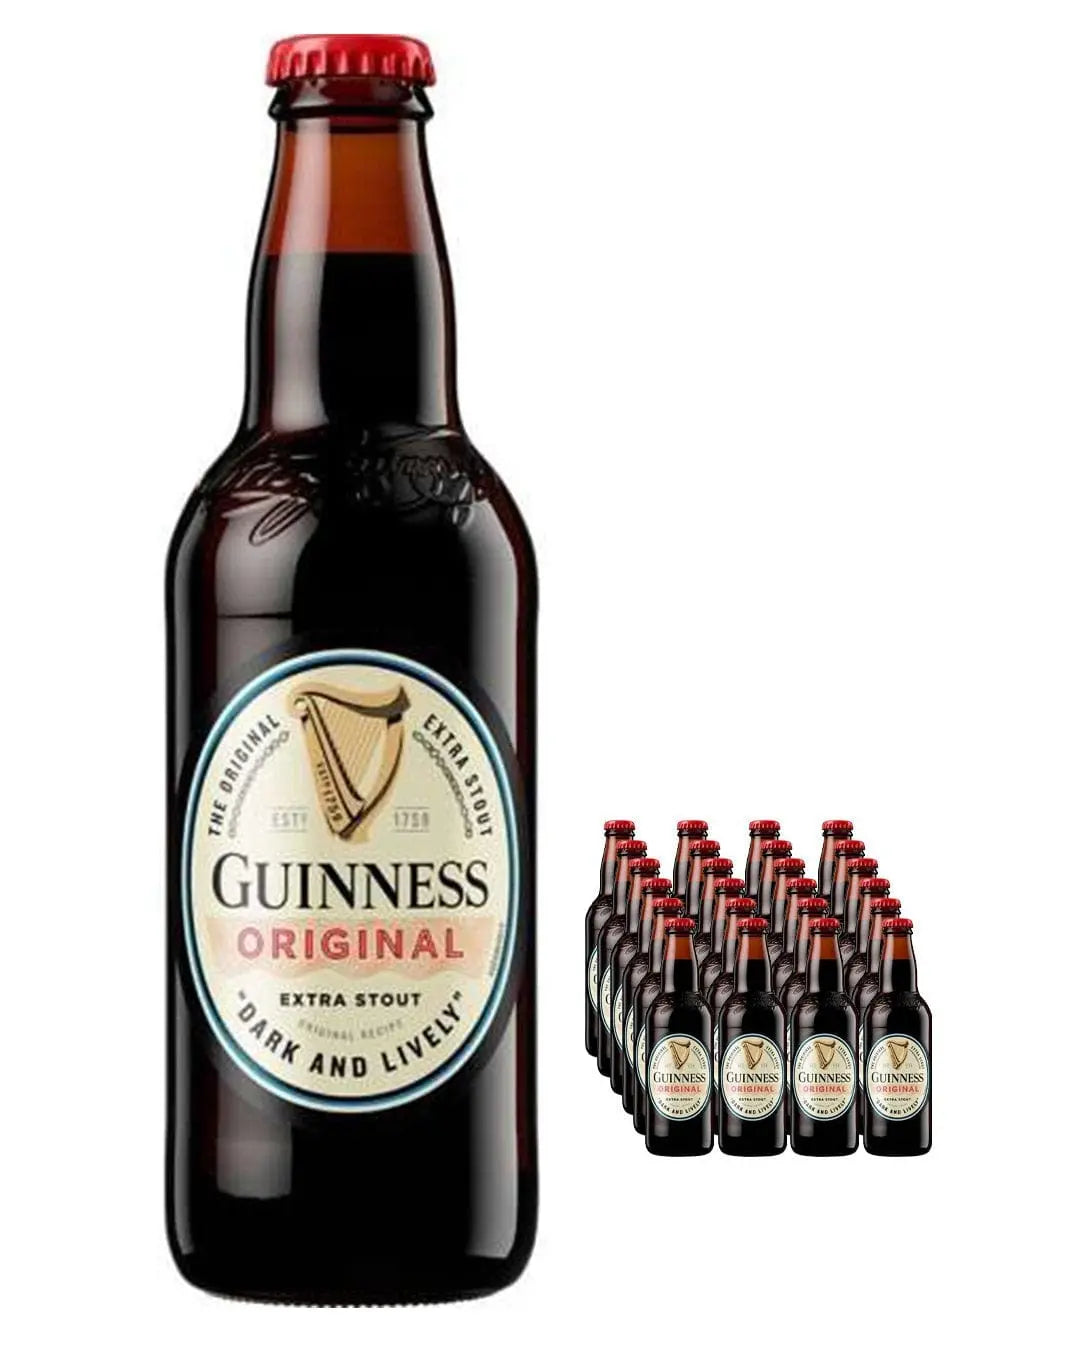 Guinness Original Extra Stout Beer Bottle Multipack, 24 x 330 ml Beer